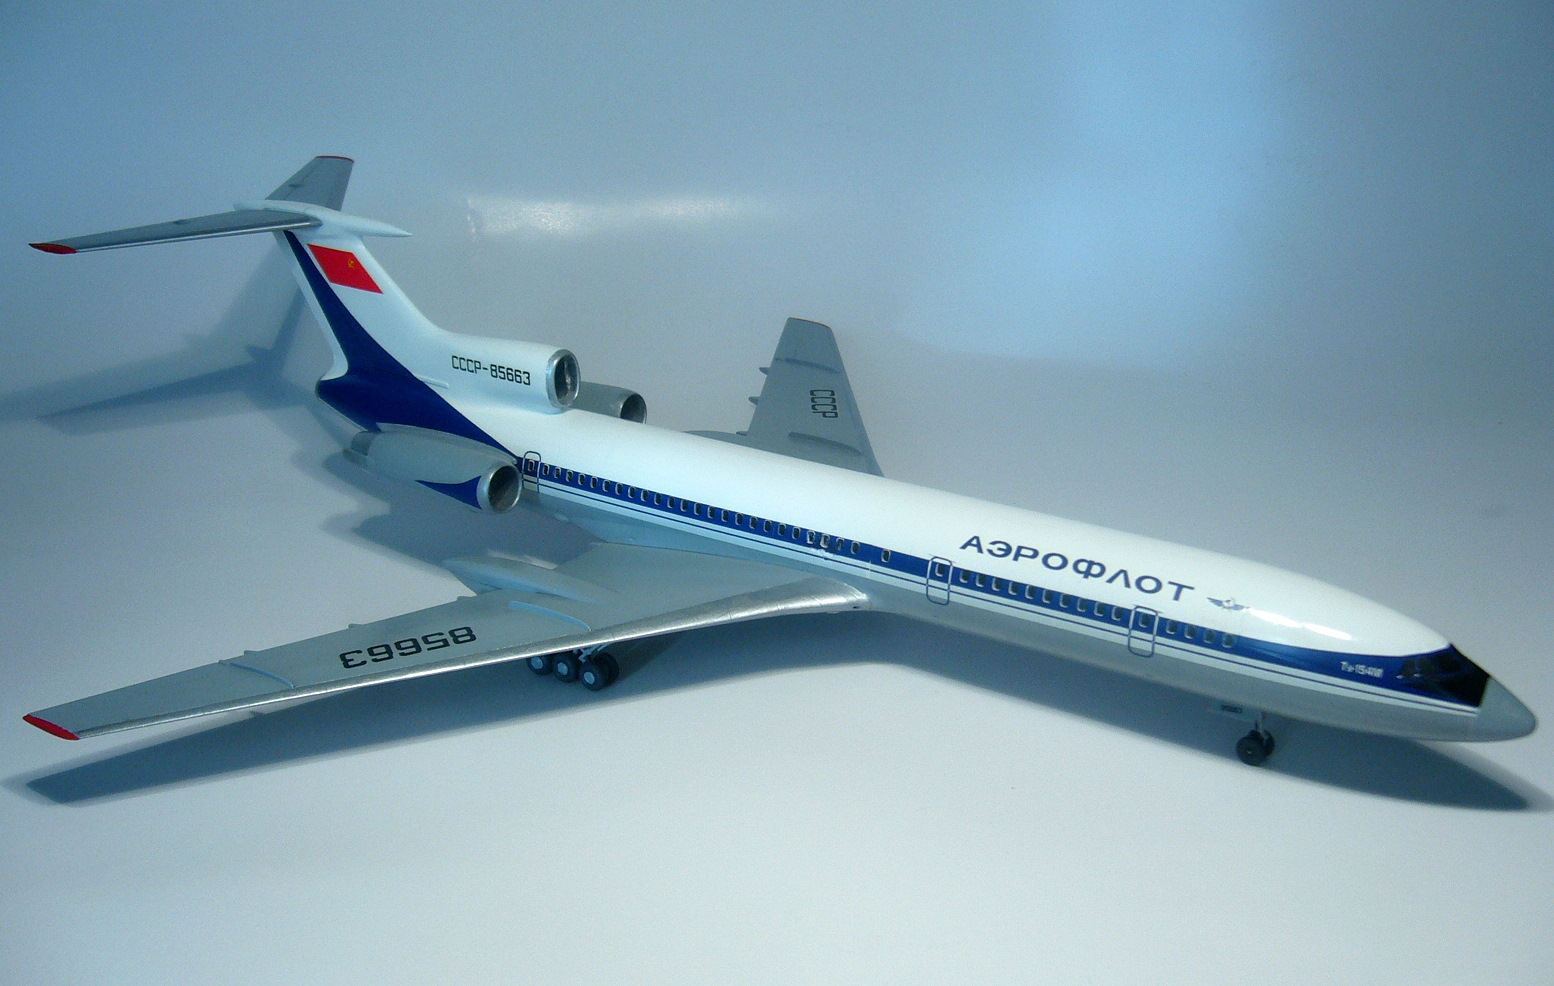 Tu 154 tupolew modelo kit 1:100 avión avión modelo Plasticart reifra